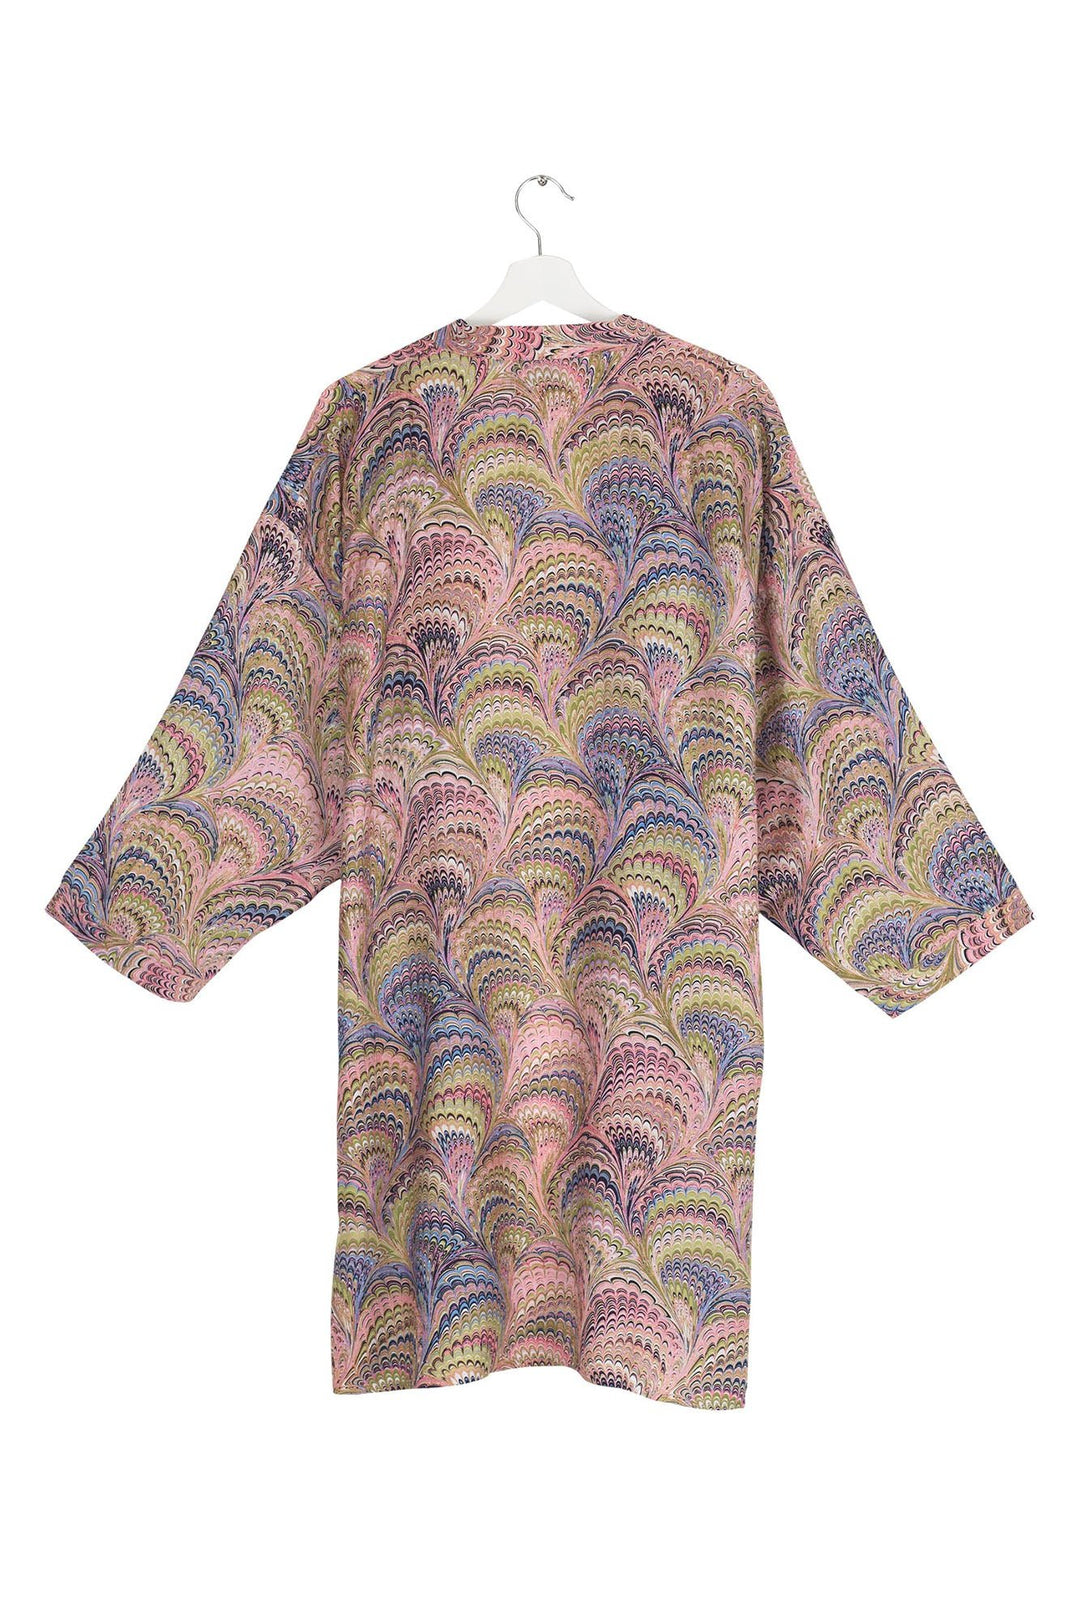 Marbled Pink Collar Kimono - One Hundred Stars